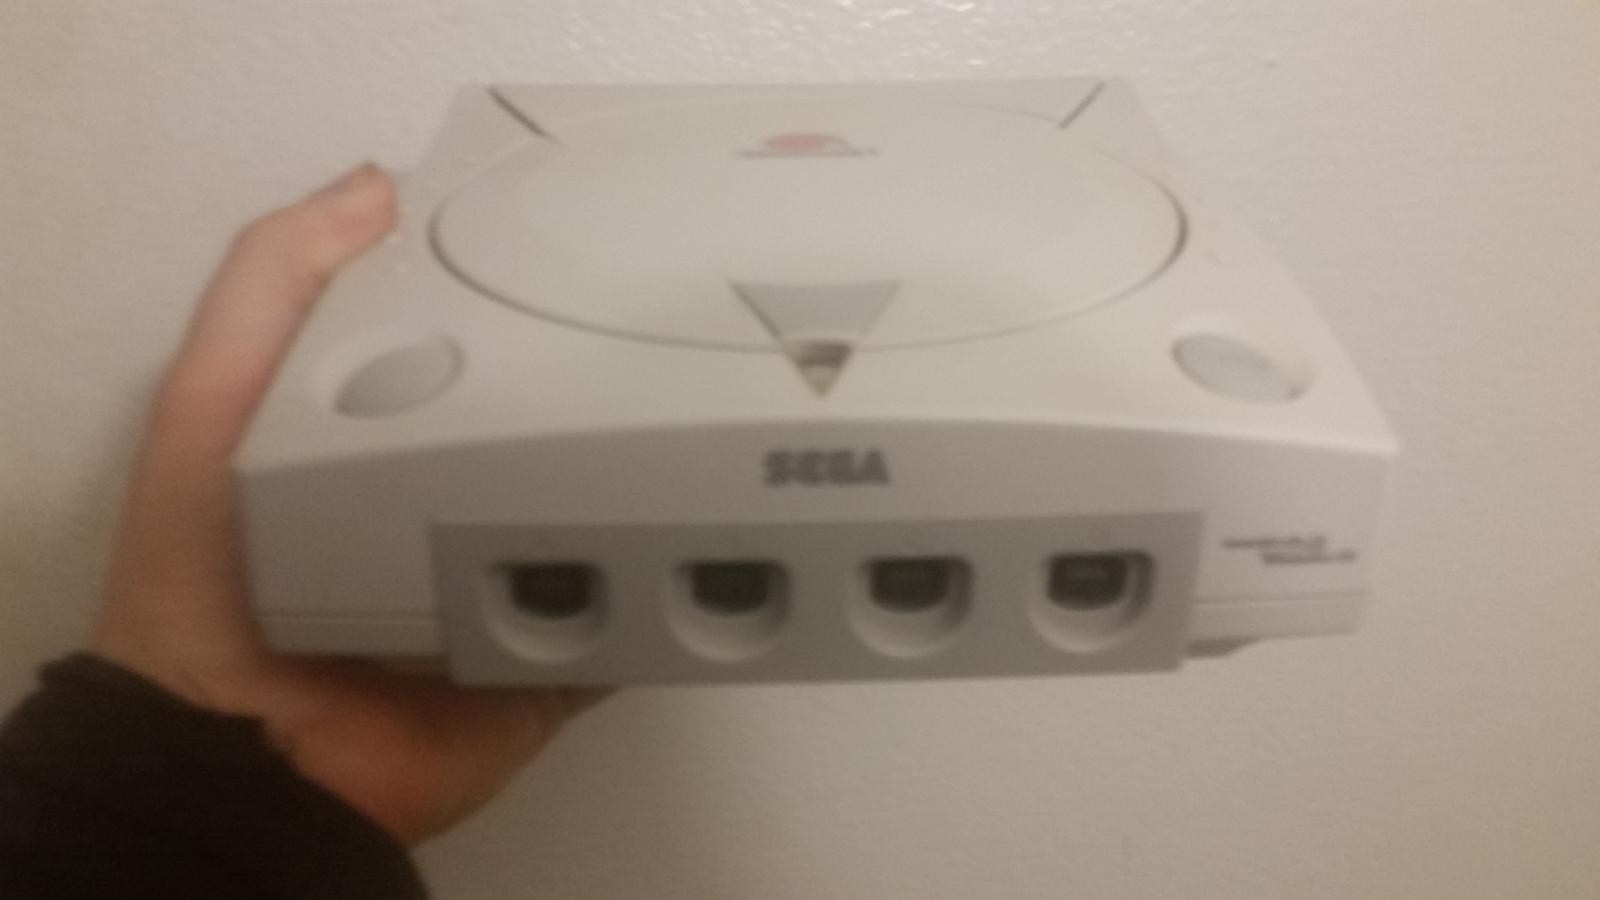 For sale Sega Dreamcast w/ Network adapter (plays burnt/backups) complete w/ 2 games